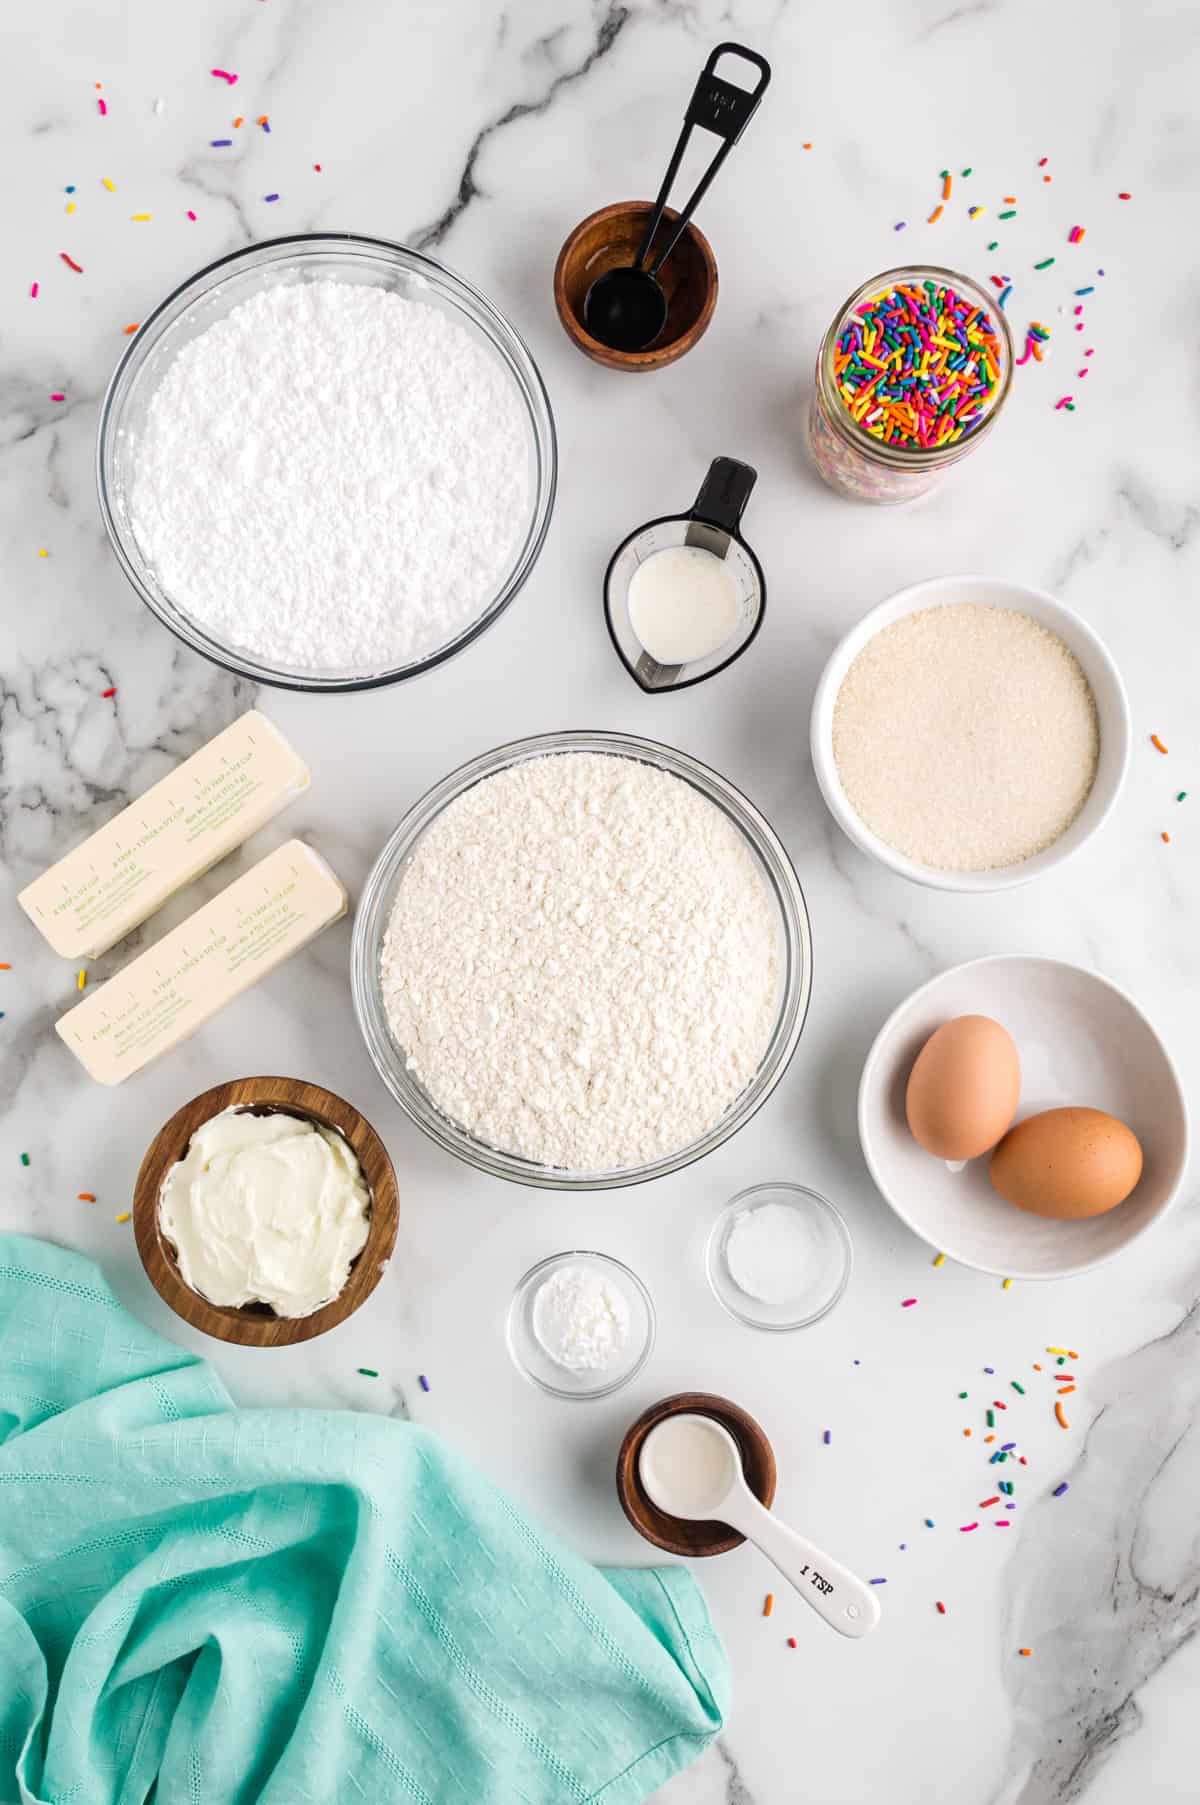 Ingredients on countertop: flour, white sugar, 2 sticks of butter, shortening, clear vanilla extract, almond extract, 2 eggs, salt, making powder, powdered sugar, cream, sprinkles